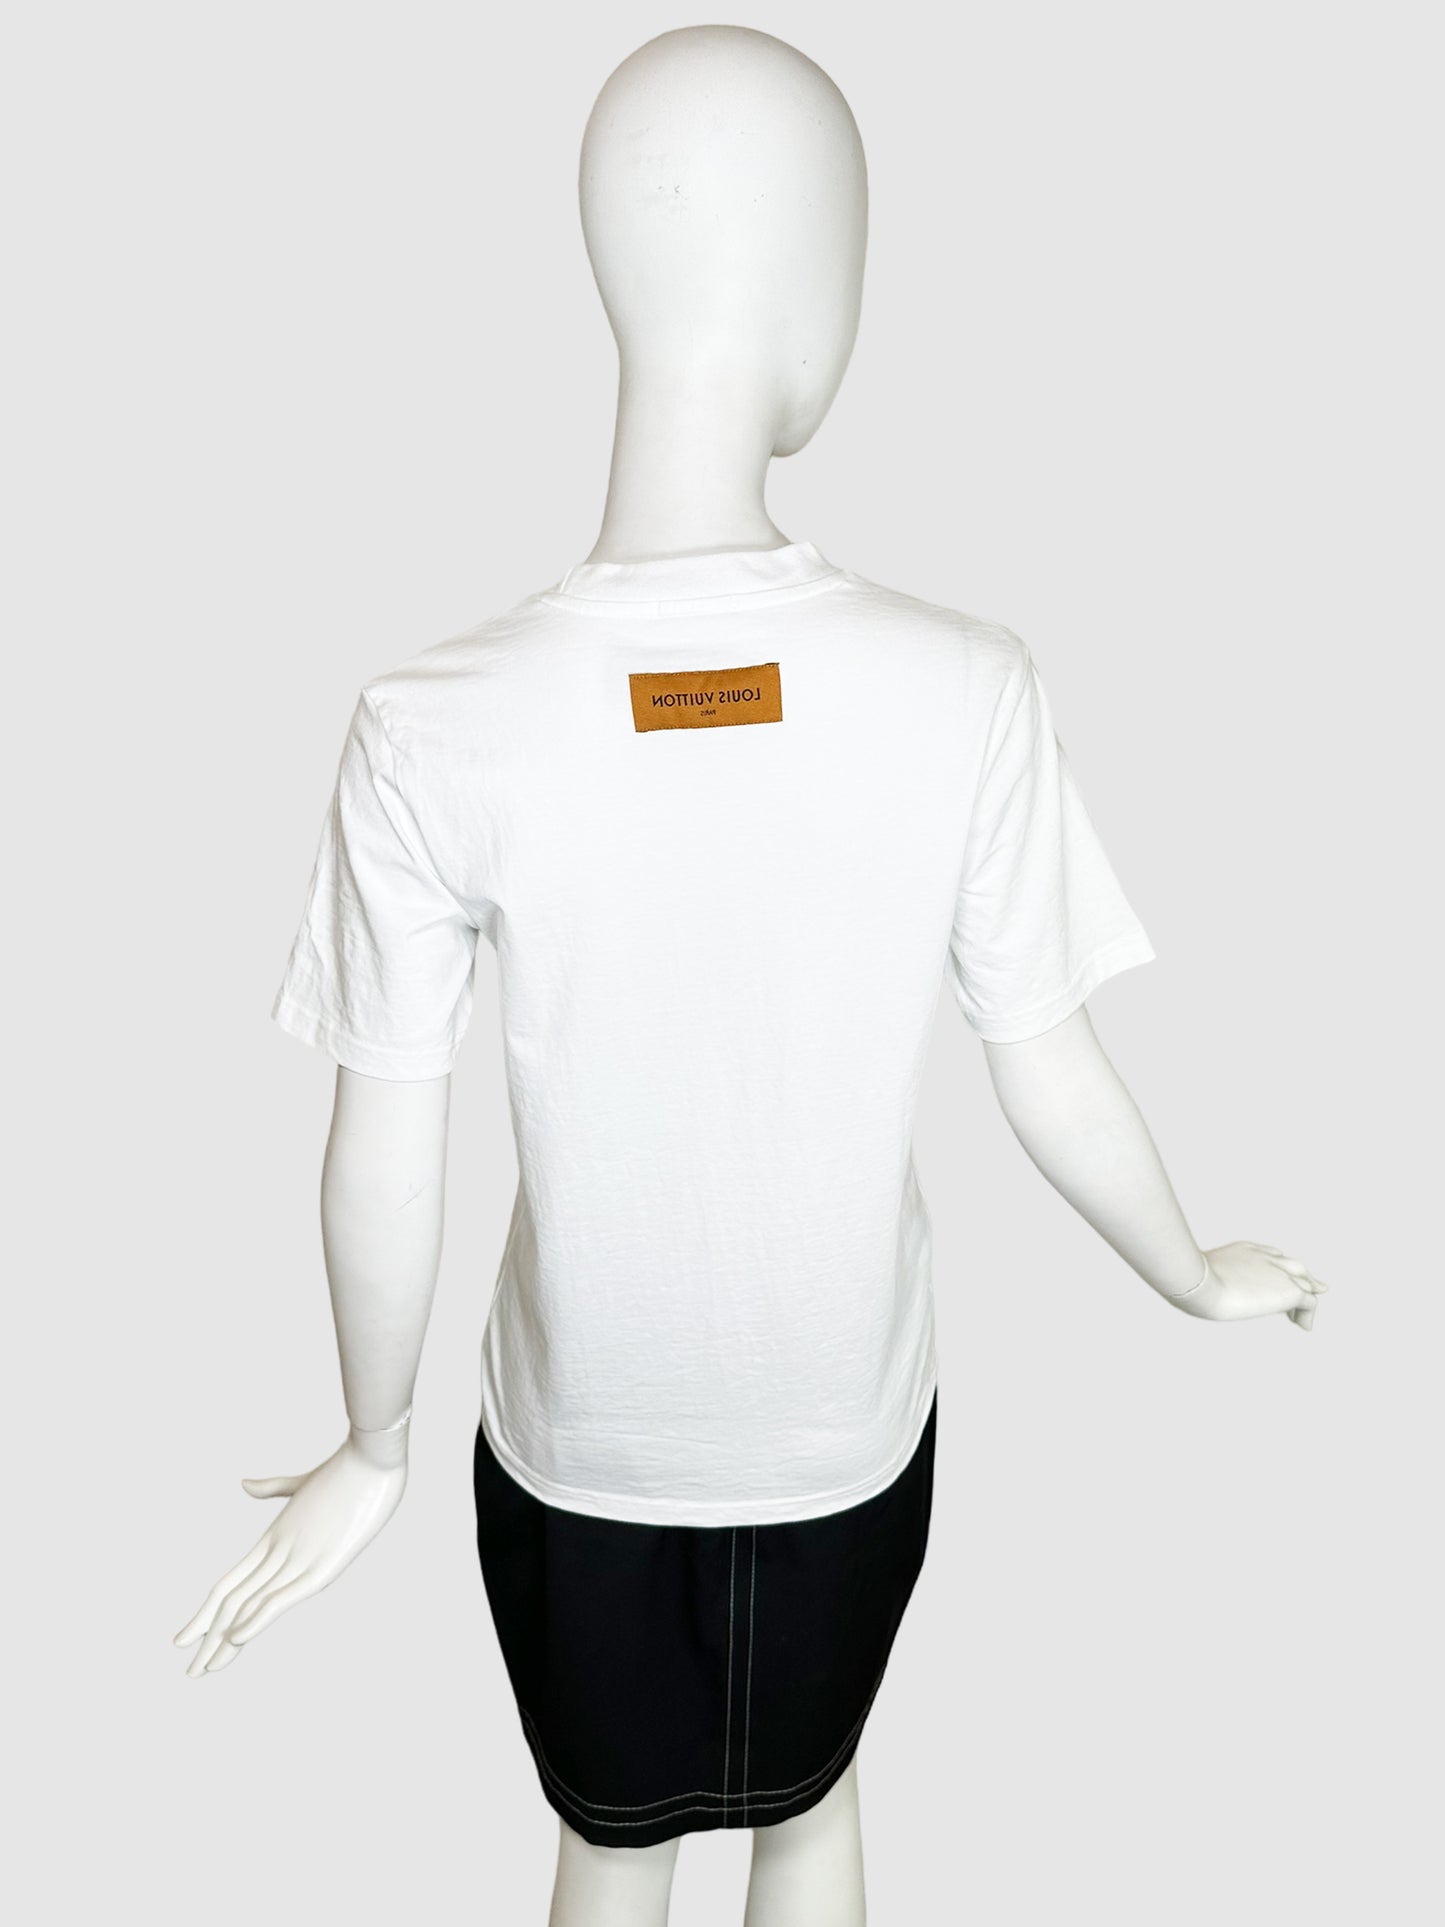 Louis Vuitton Monogram Embroidery T-Shirt - Size S/M